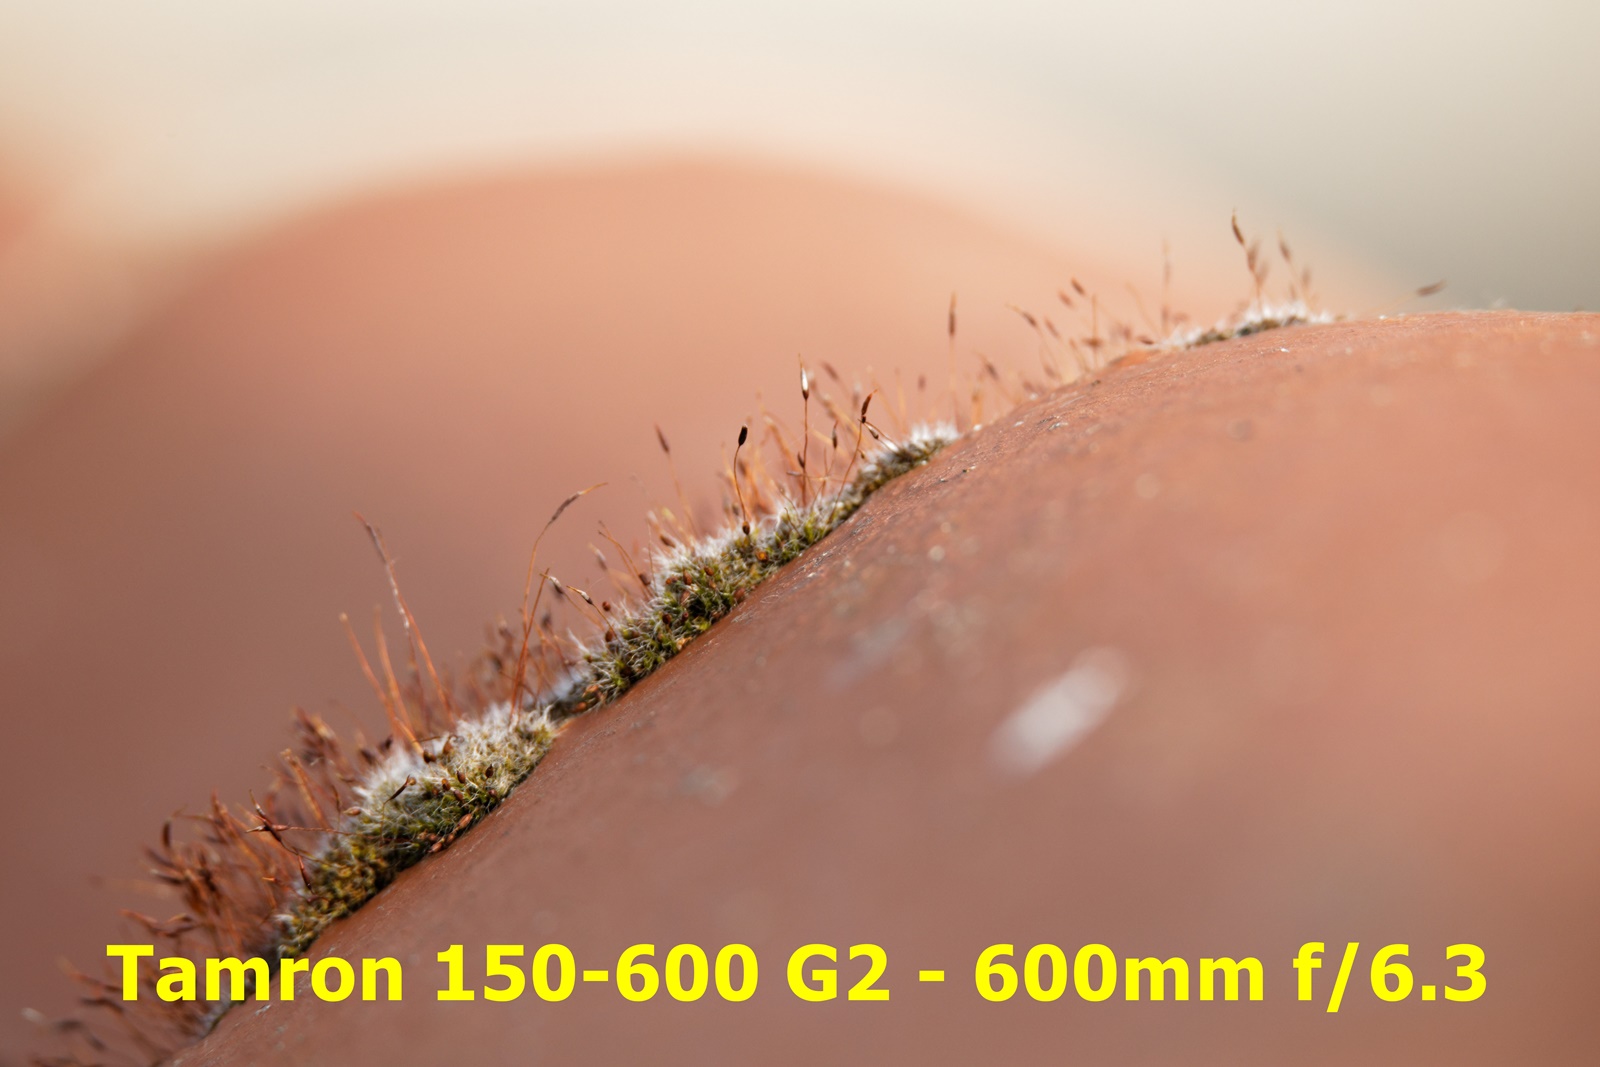 Canon 5DIV + Tamron 150-600 G2 - Bokeh max - beanico-photo